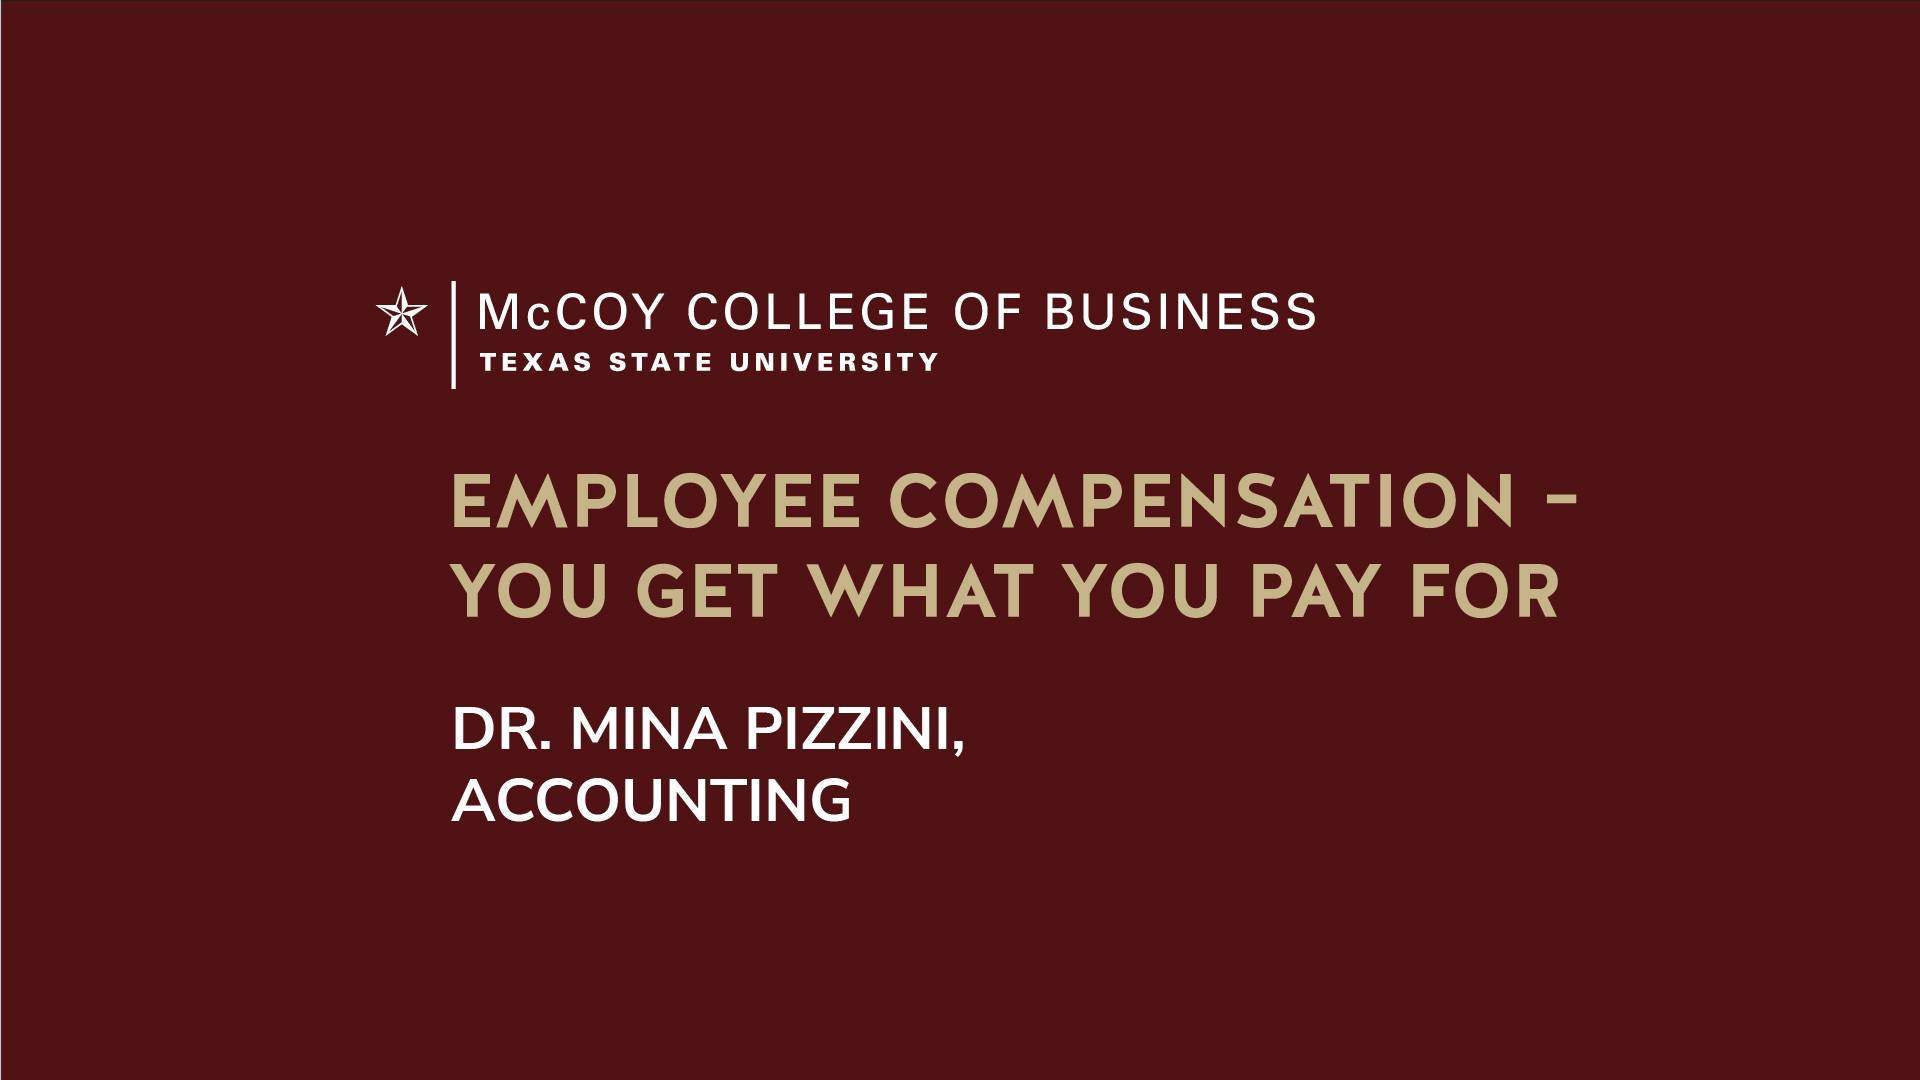 Dr. Mina Pizzi discusses employee compensation